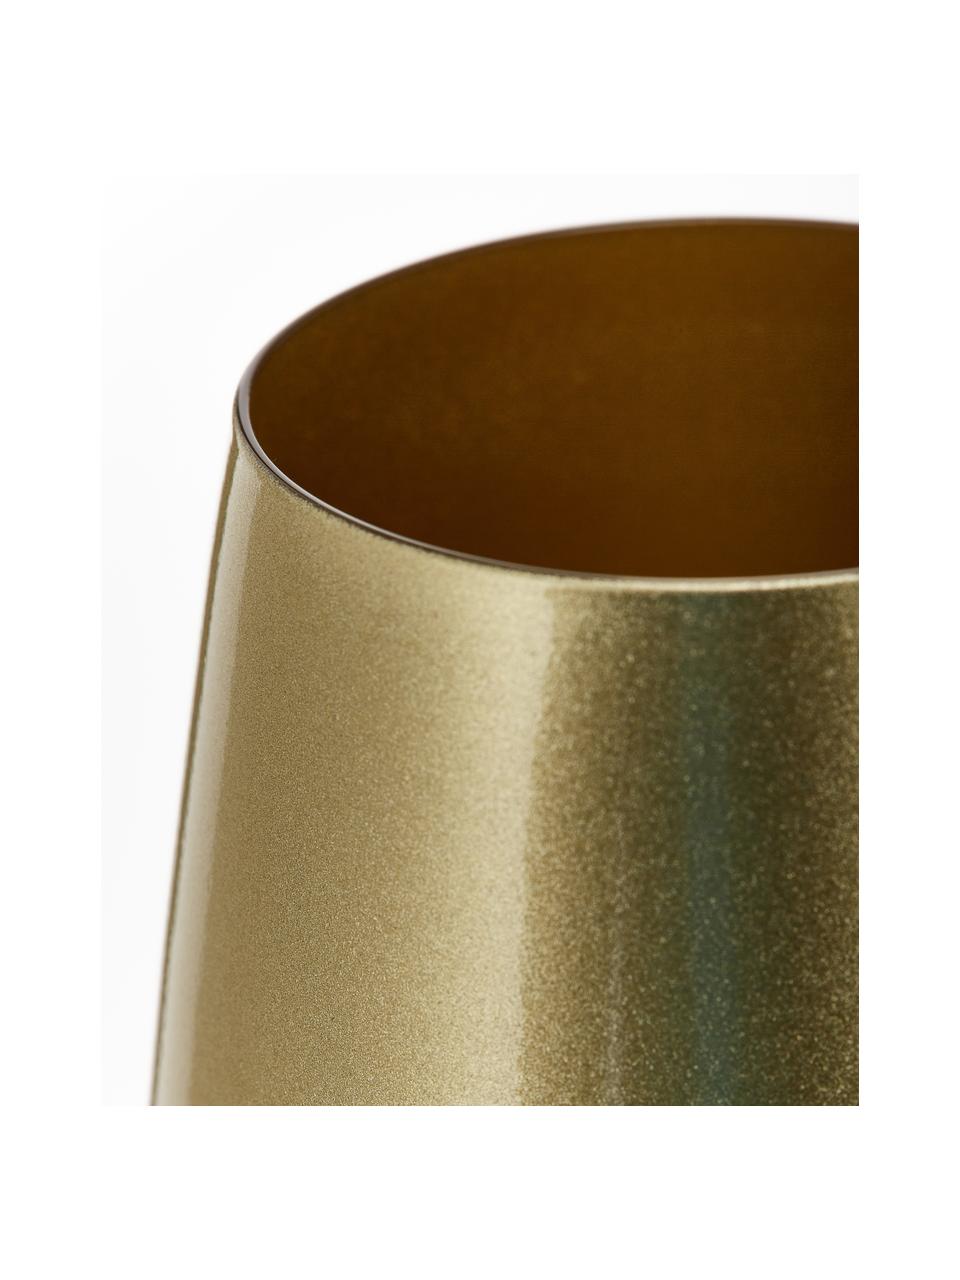 Kristall-Longdrinkgläser Elements in Gold, 6 Stück, Kristallglas, beschichtet, Goldfarben, Ø 9 x H 12 cm, 465 ml